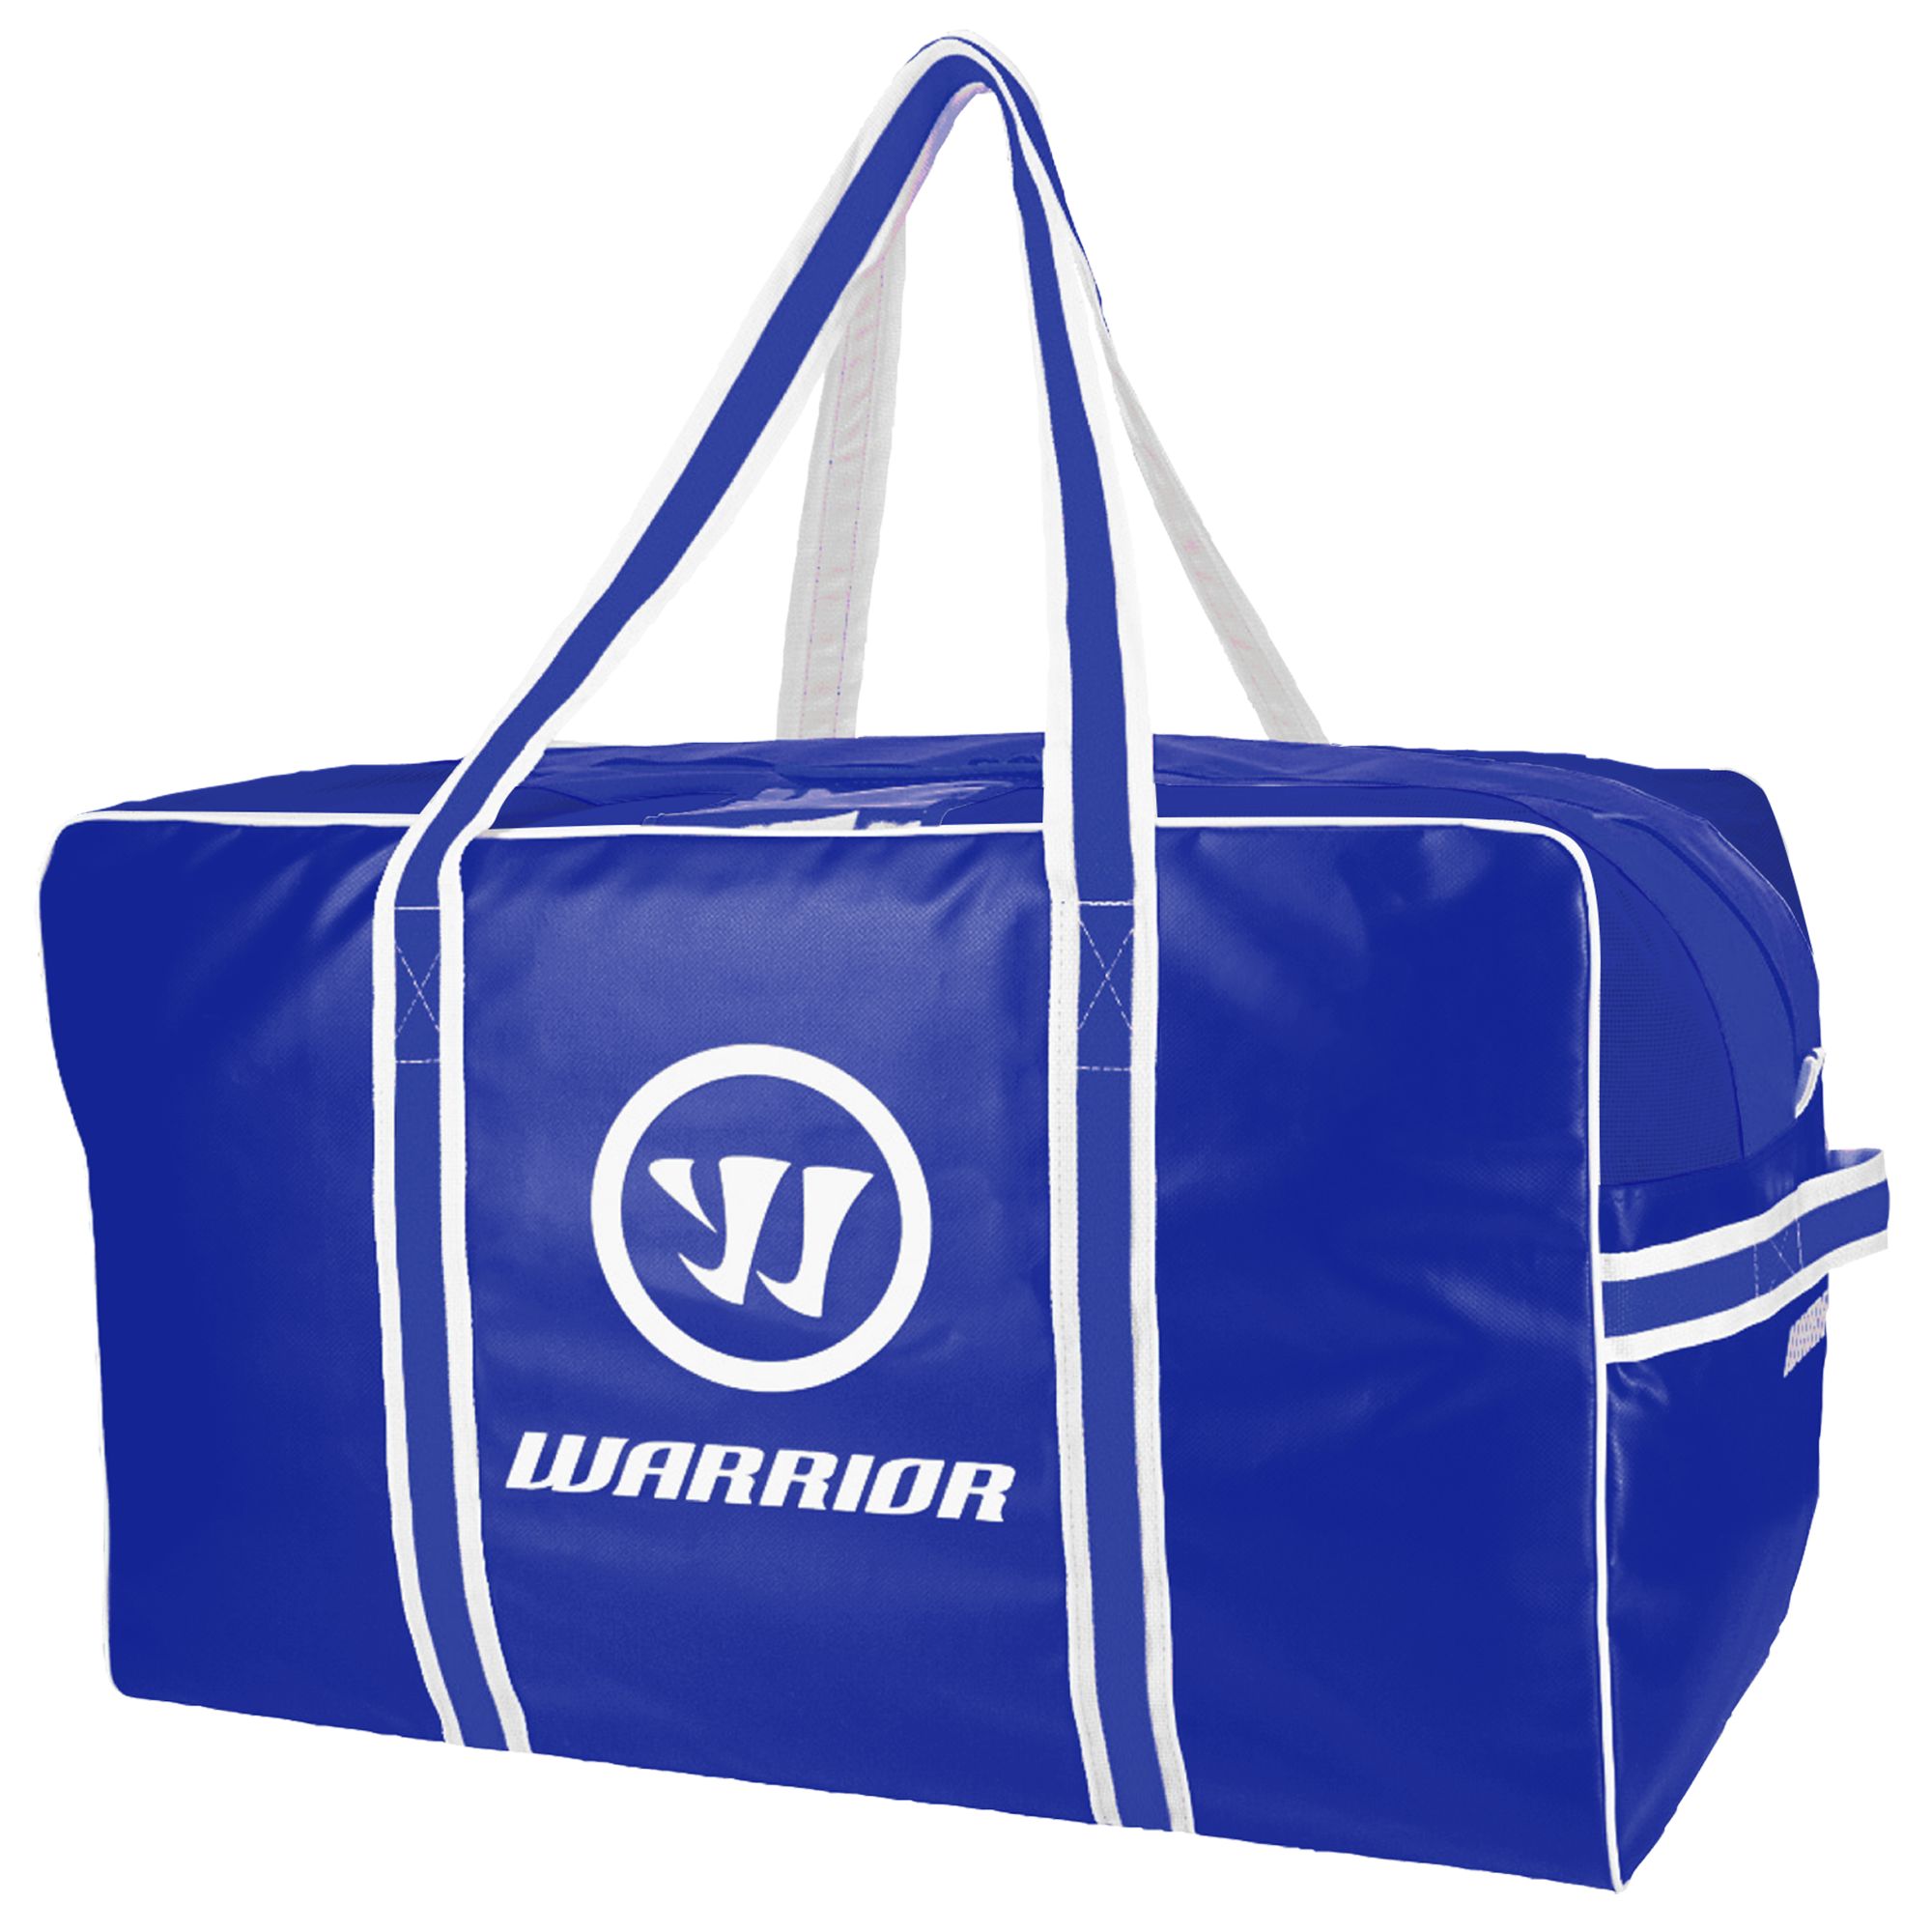 Warrior Pro Bag, Royal Blue with White image number 1